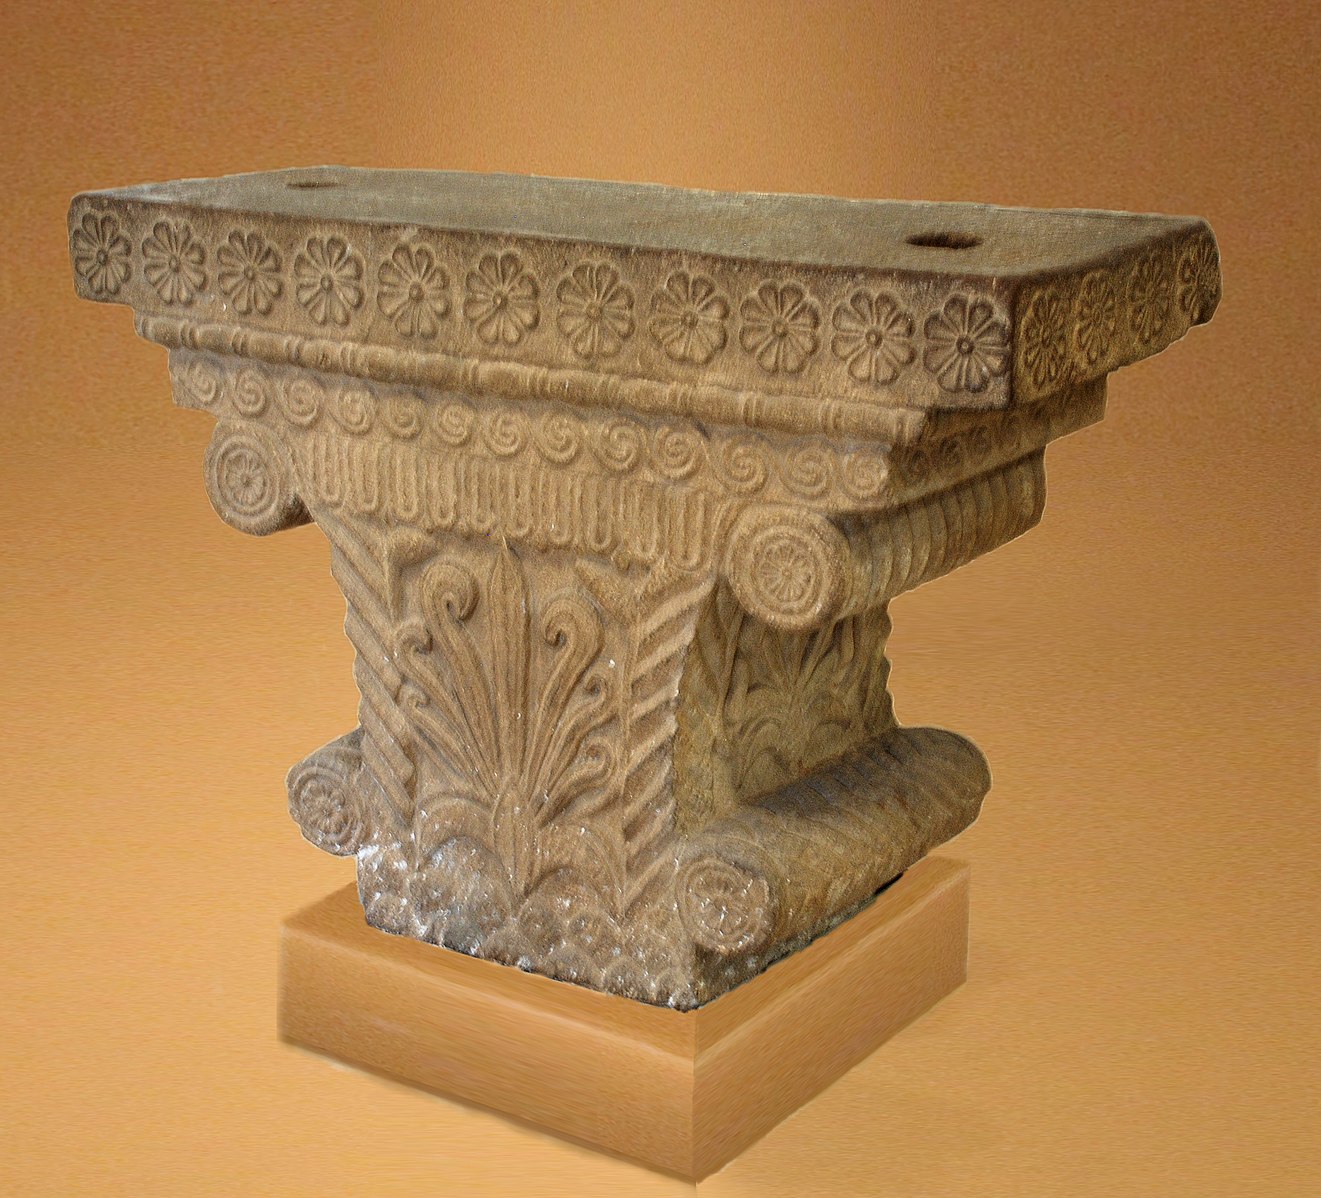 Pataliputra_capital,_Bihar_Museum,_Patna,_3rd_century_BCE.jpg